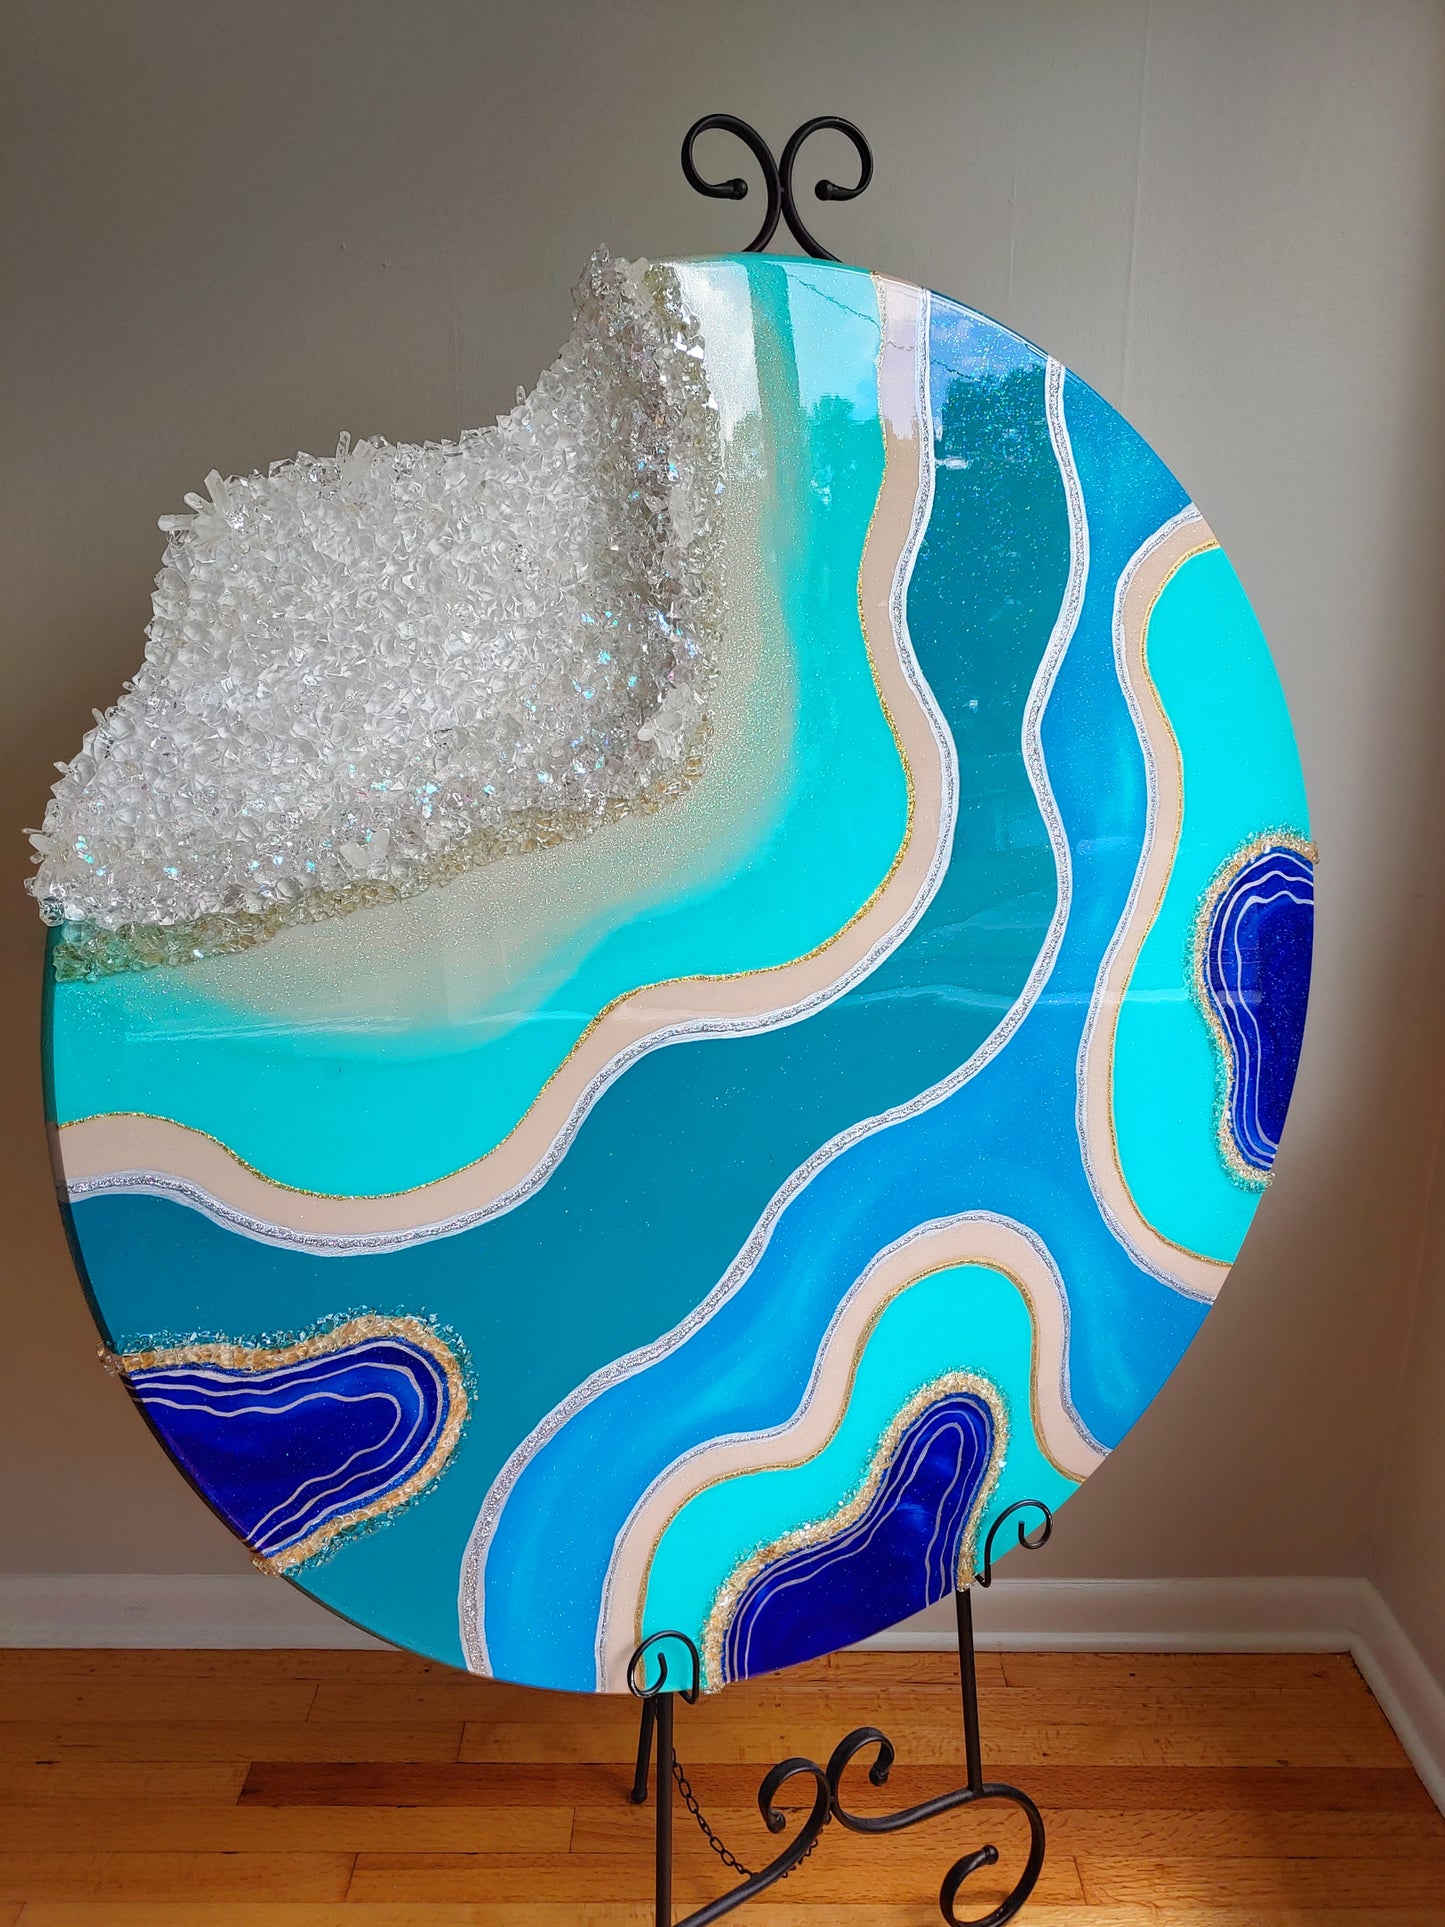 Blue wave cut out geode art